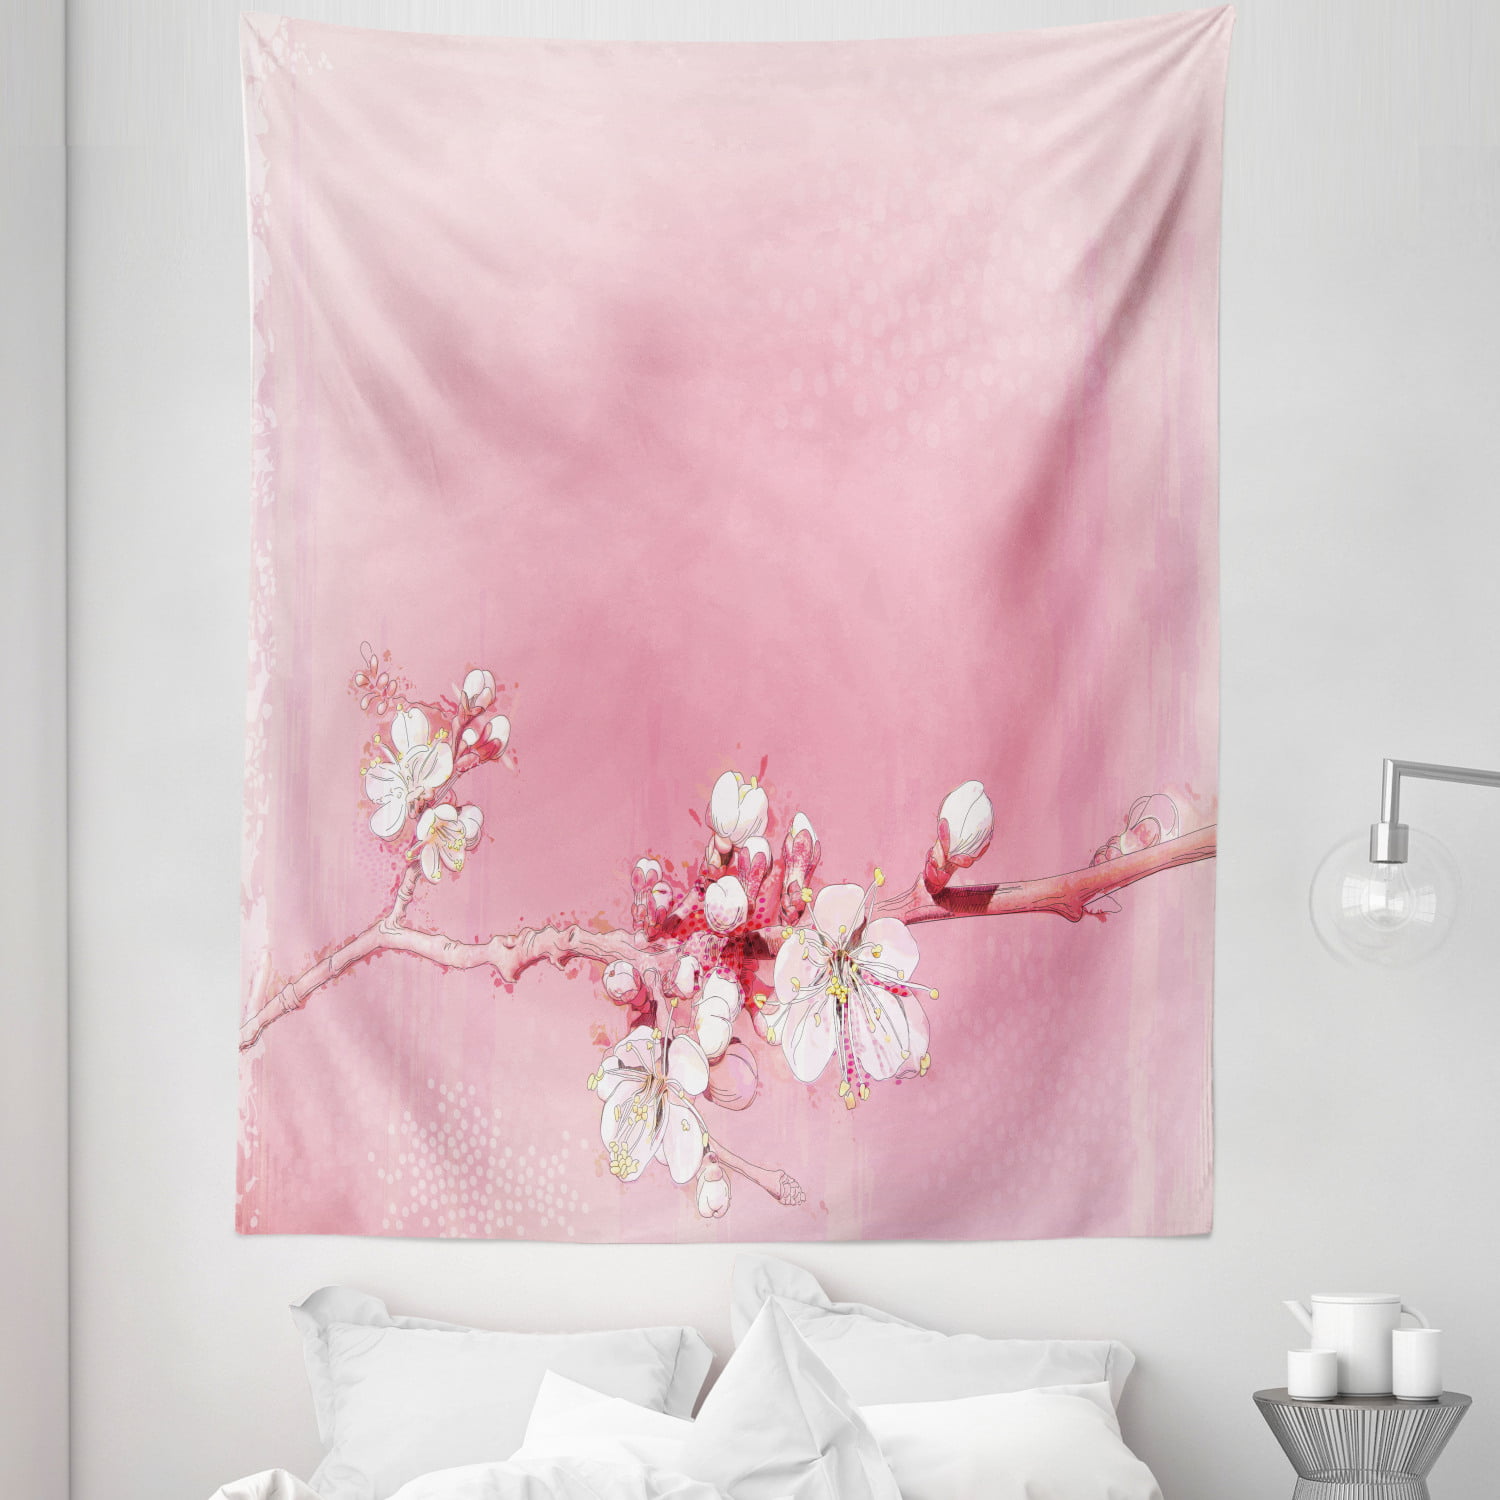 Red Cherry Blossom Flower Tapestry For Living Room Bedroom Dorm Wall Hanging Rug